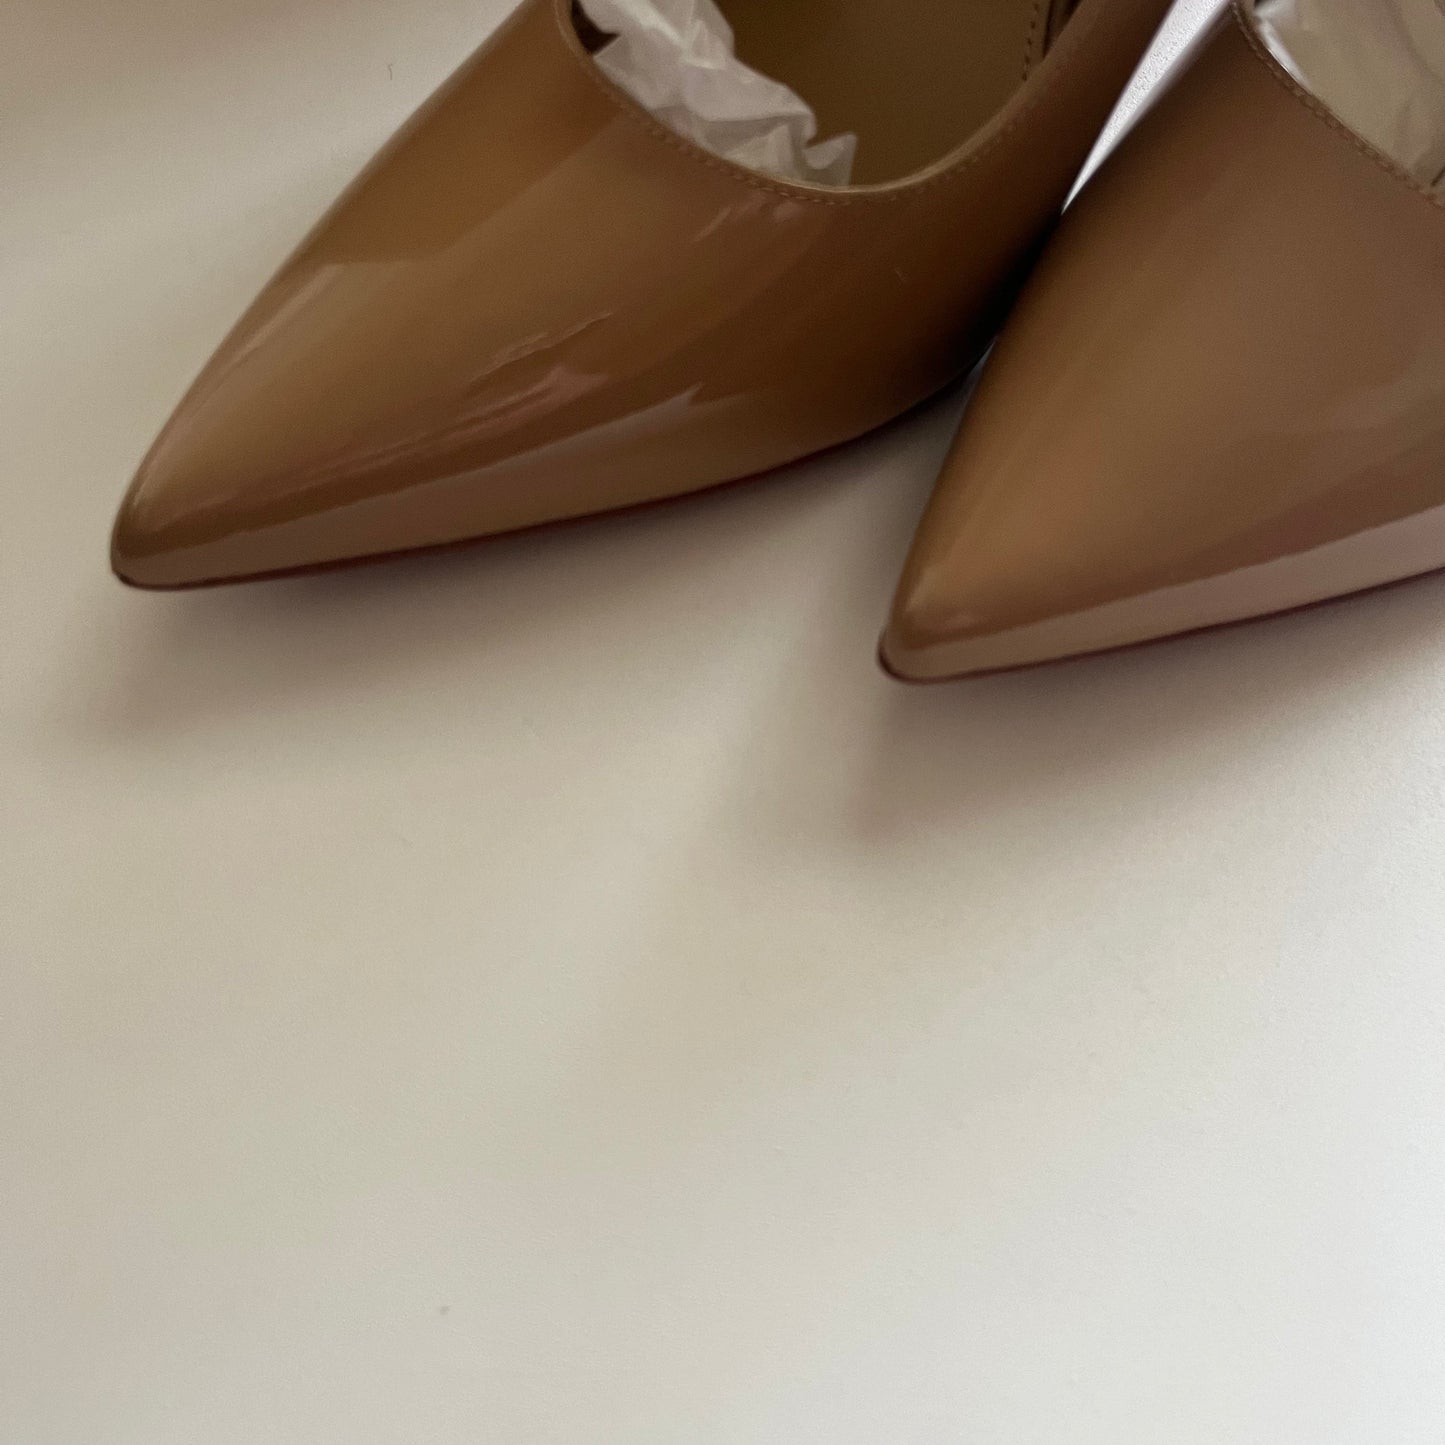 Tan Shoes Heels Stiletto Michael Kors, Size 9.5